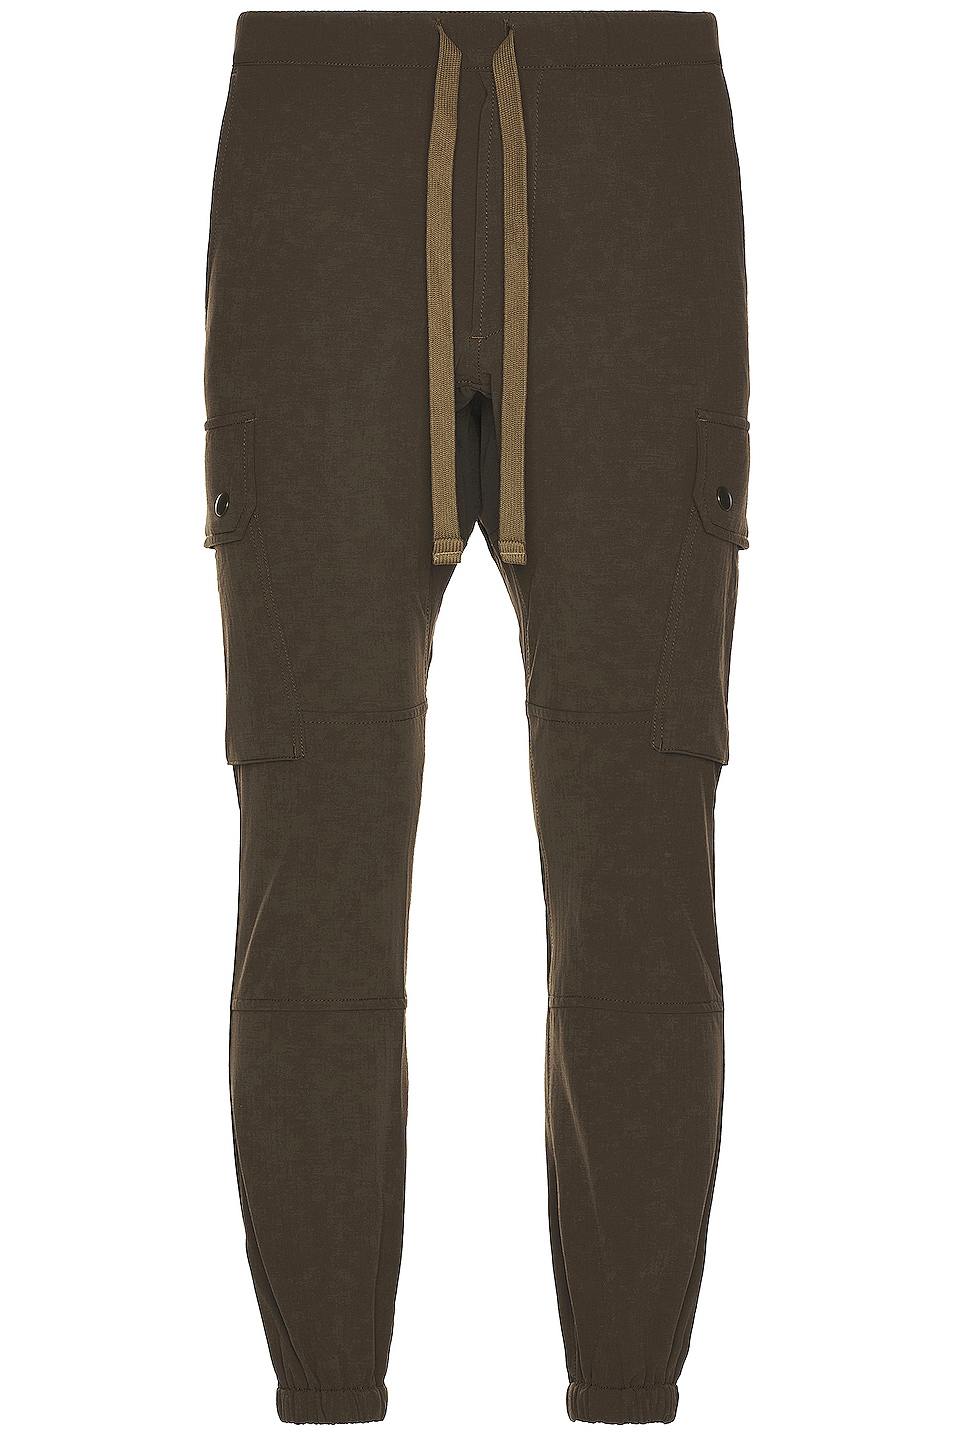 Image 1 of Beams Plus Gym Pants 6 Pocket Jersey Back Fleece in Olive